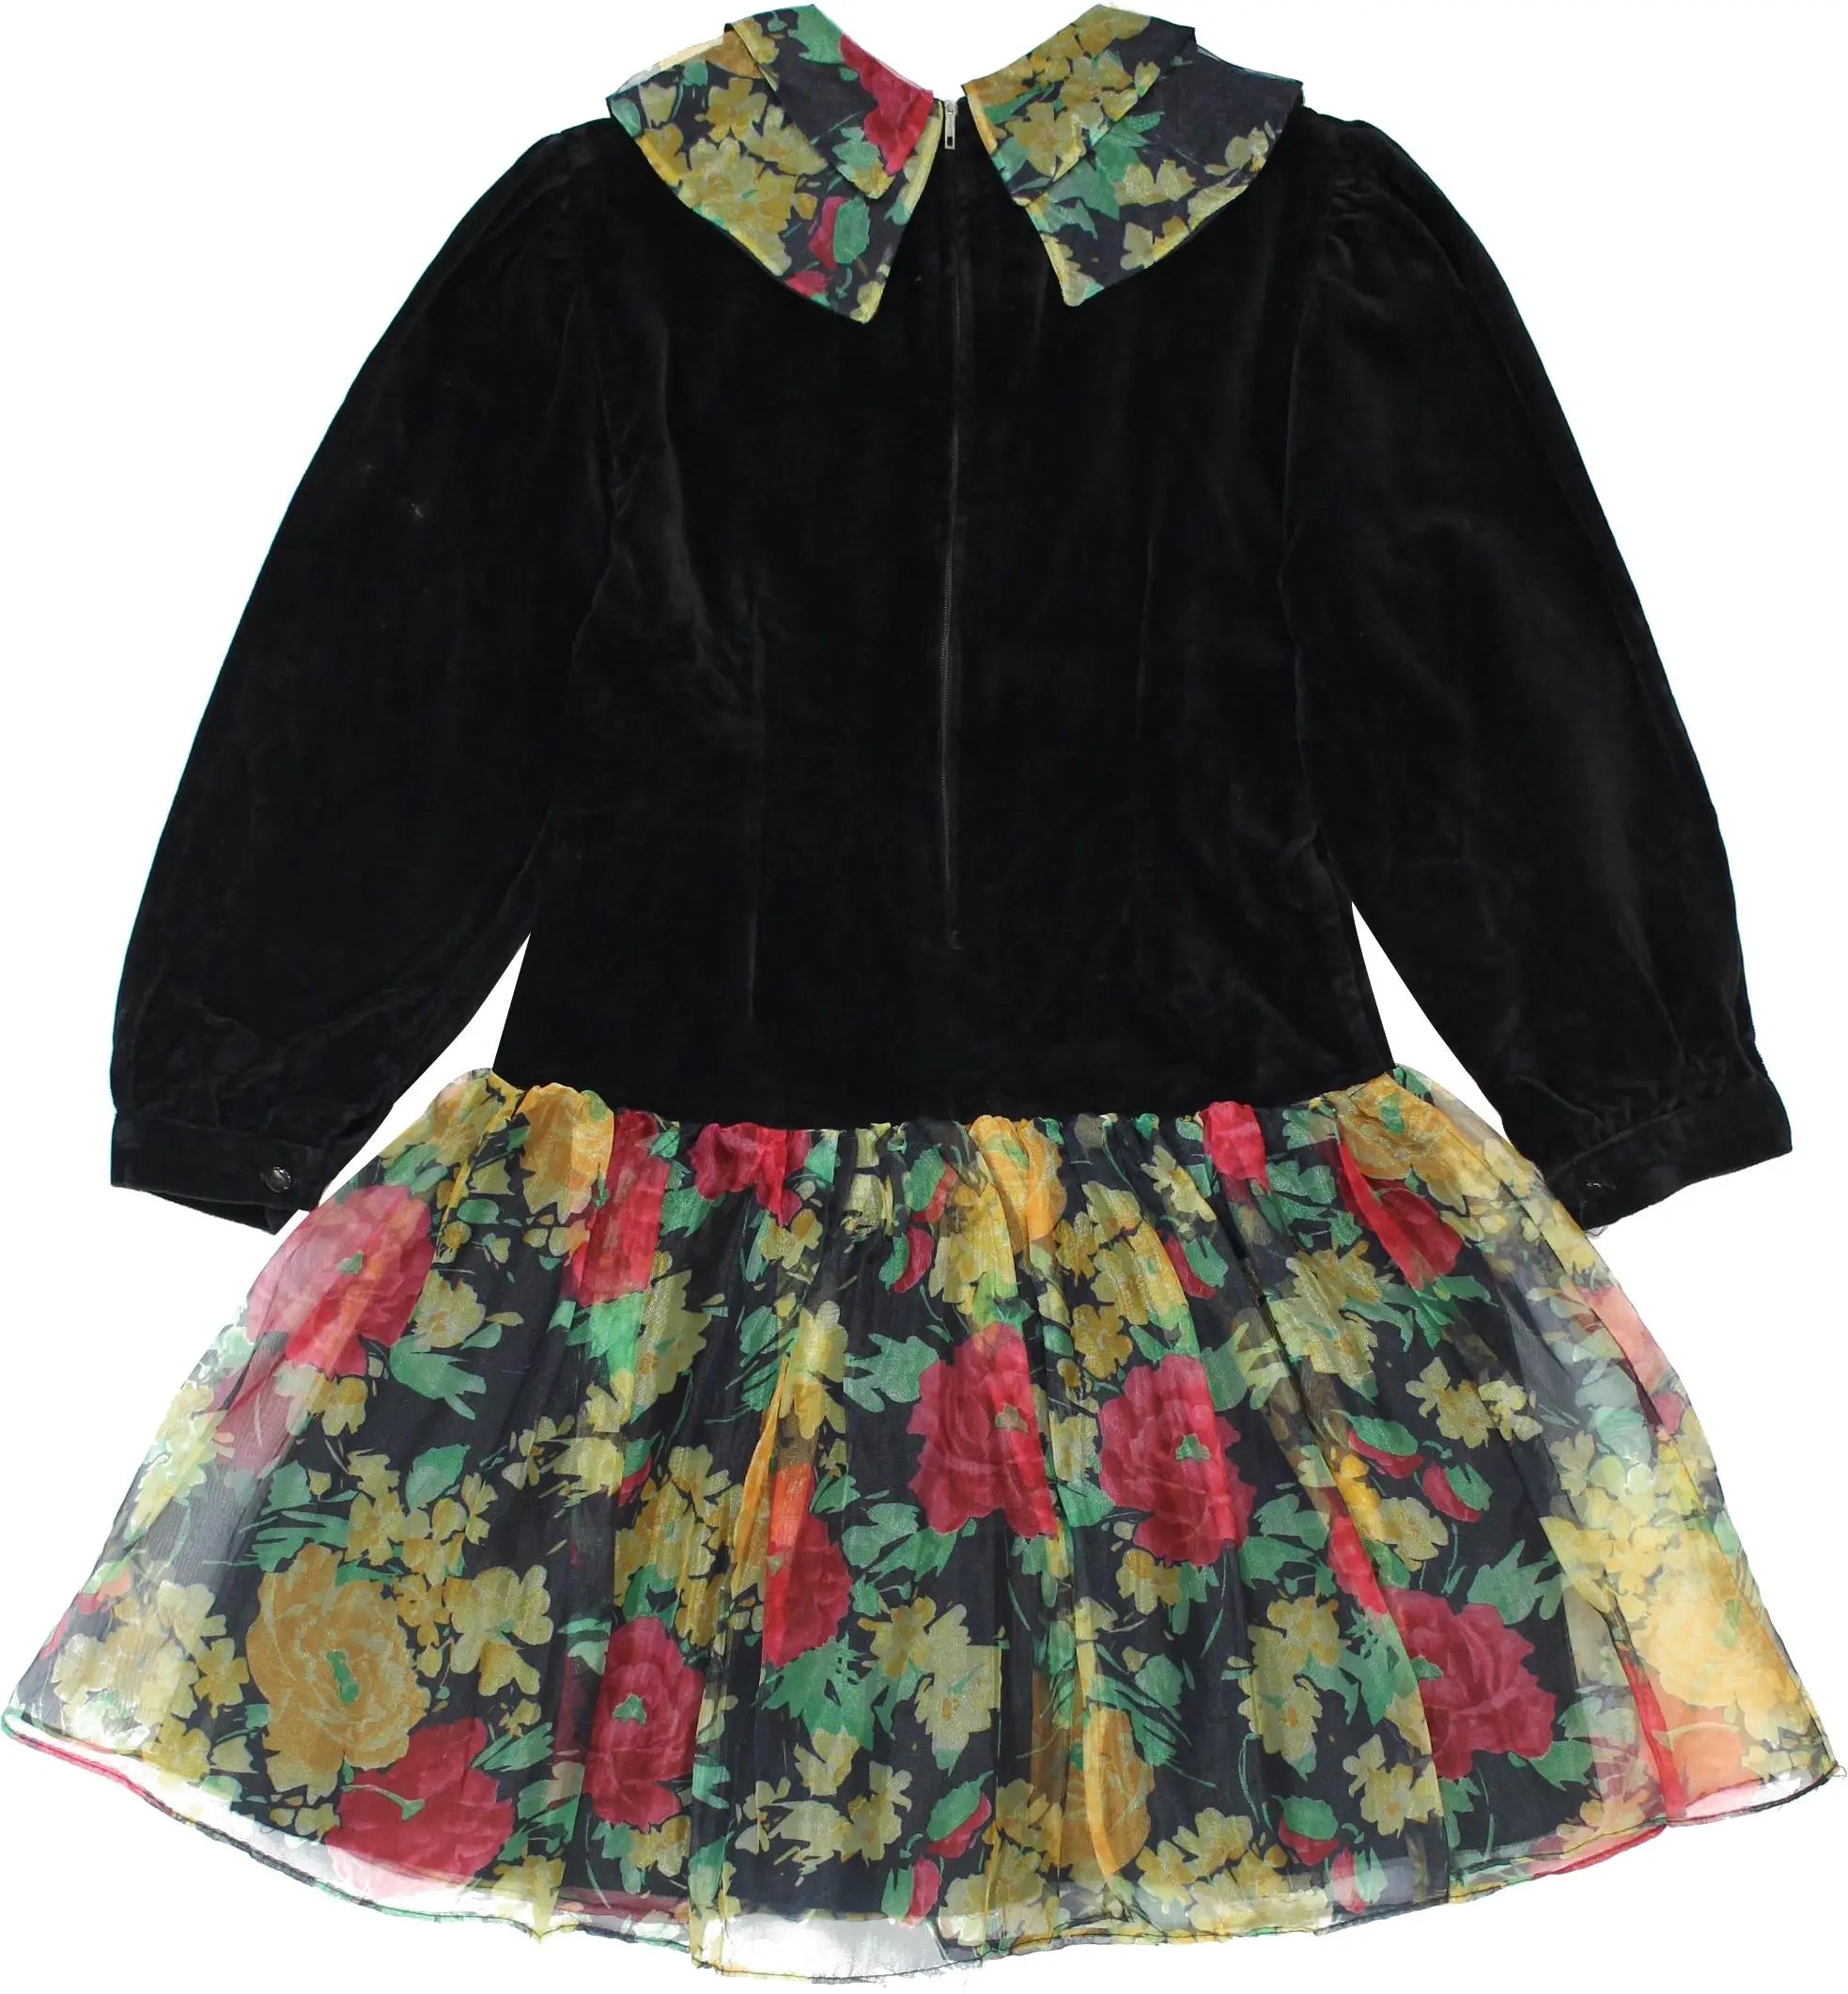 Vanna - Black Velvet Dress- ThriftTale.com - Vintage and second handclothing